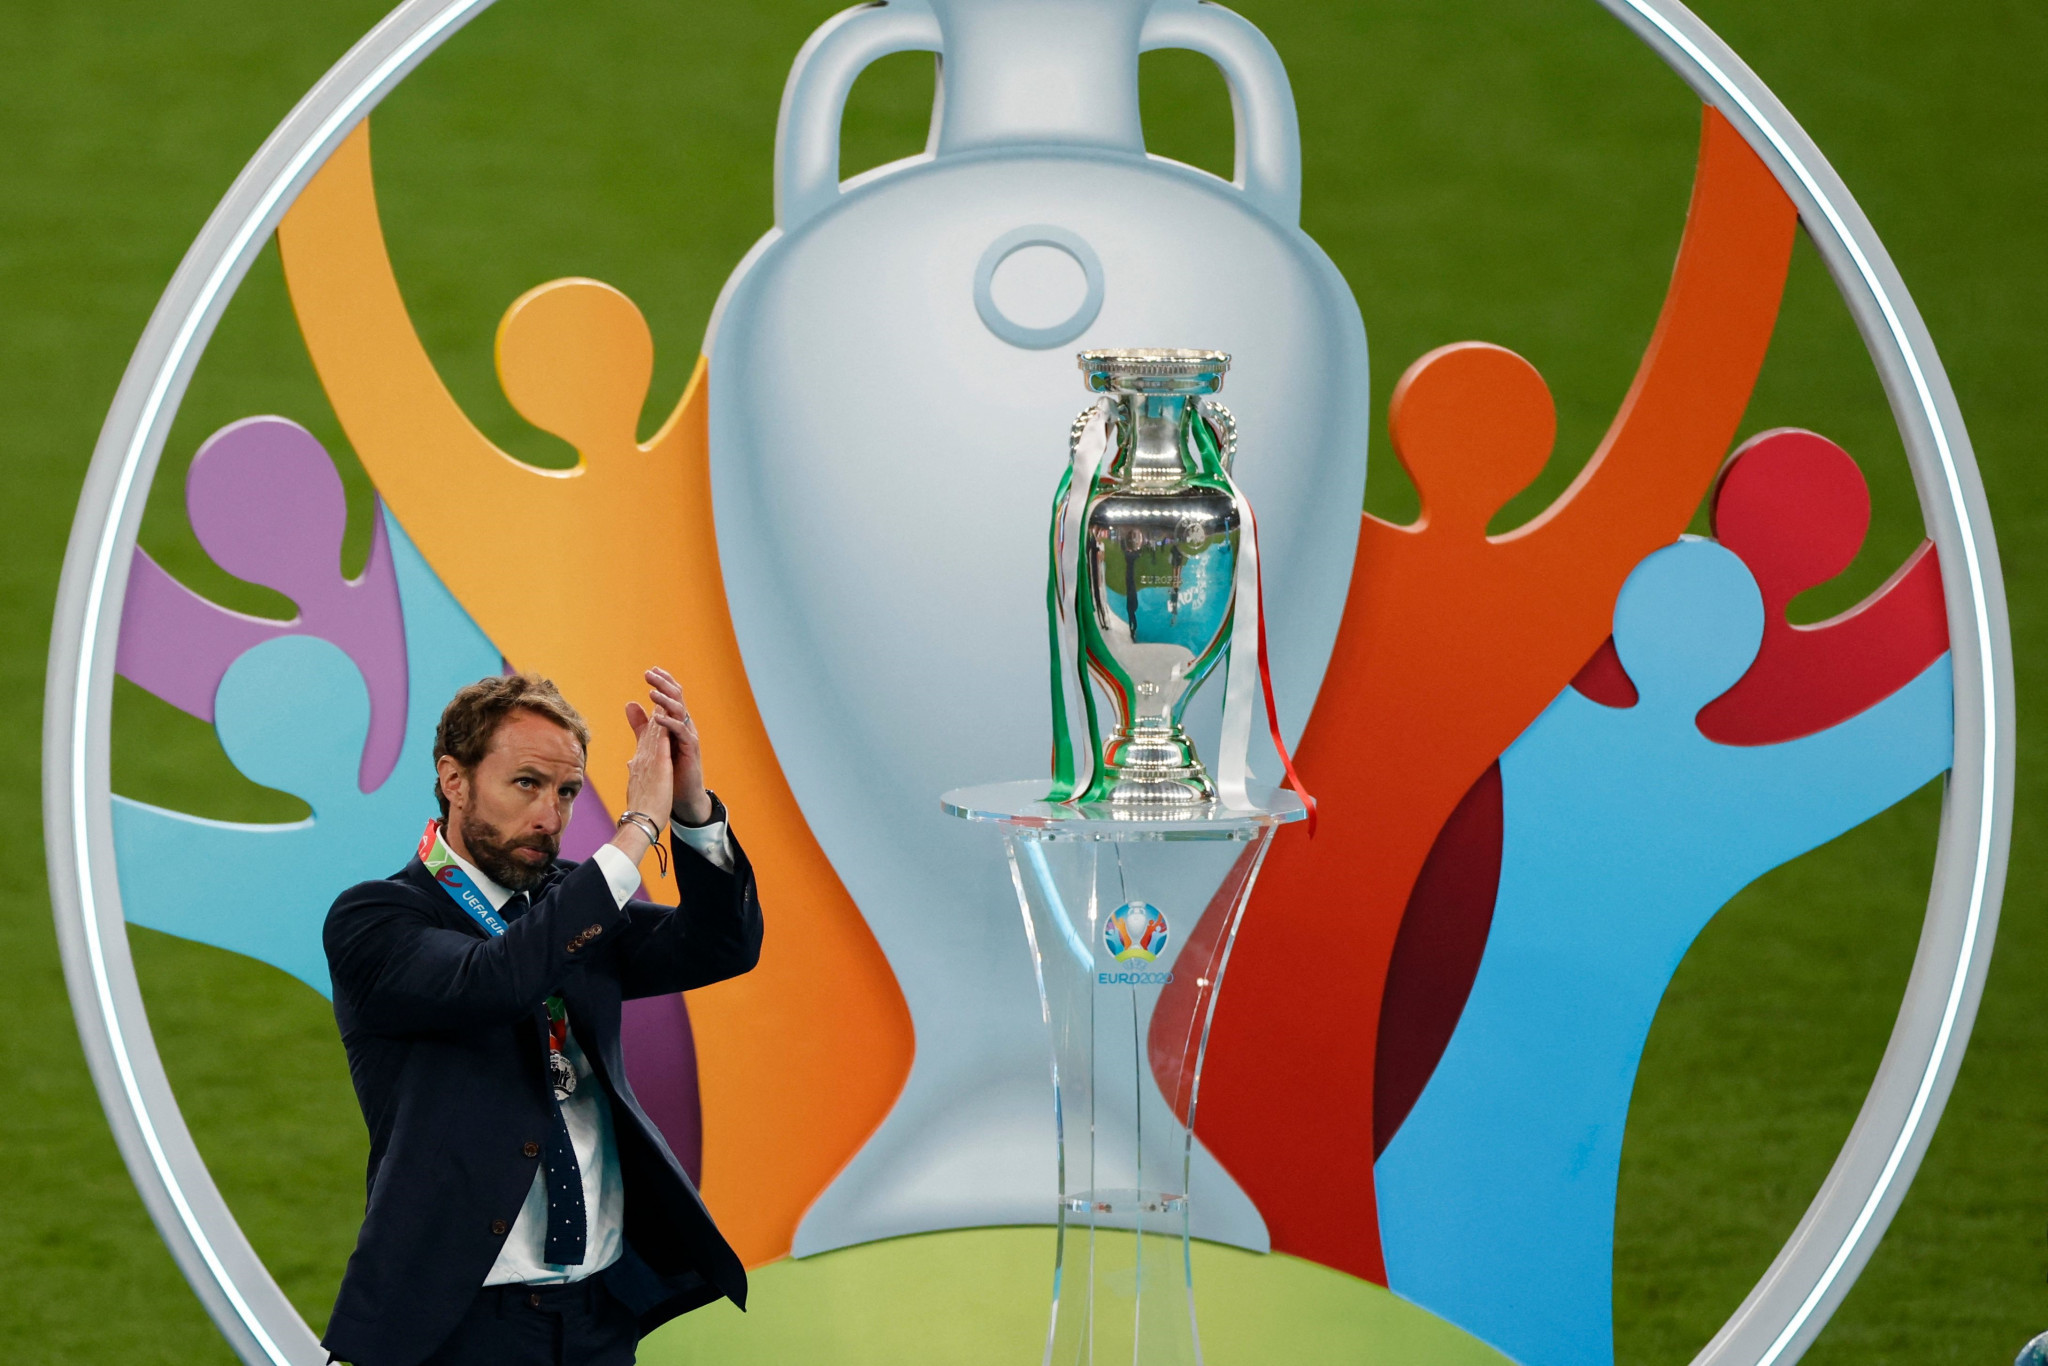 UK and Ireland eye 2028 European Championship bid as 2030 World Cup hopes wane